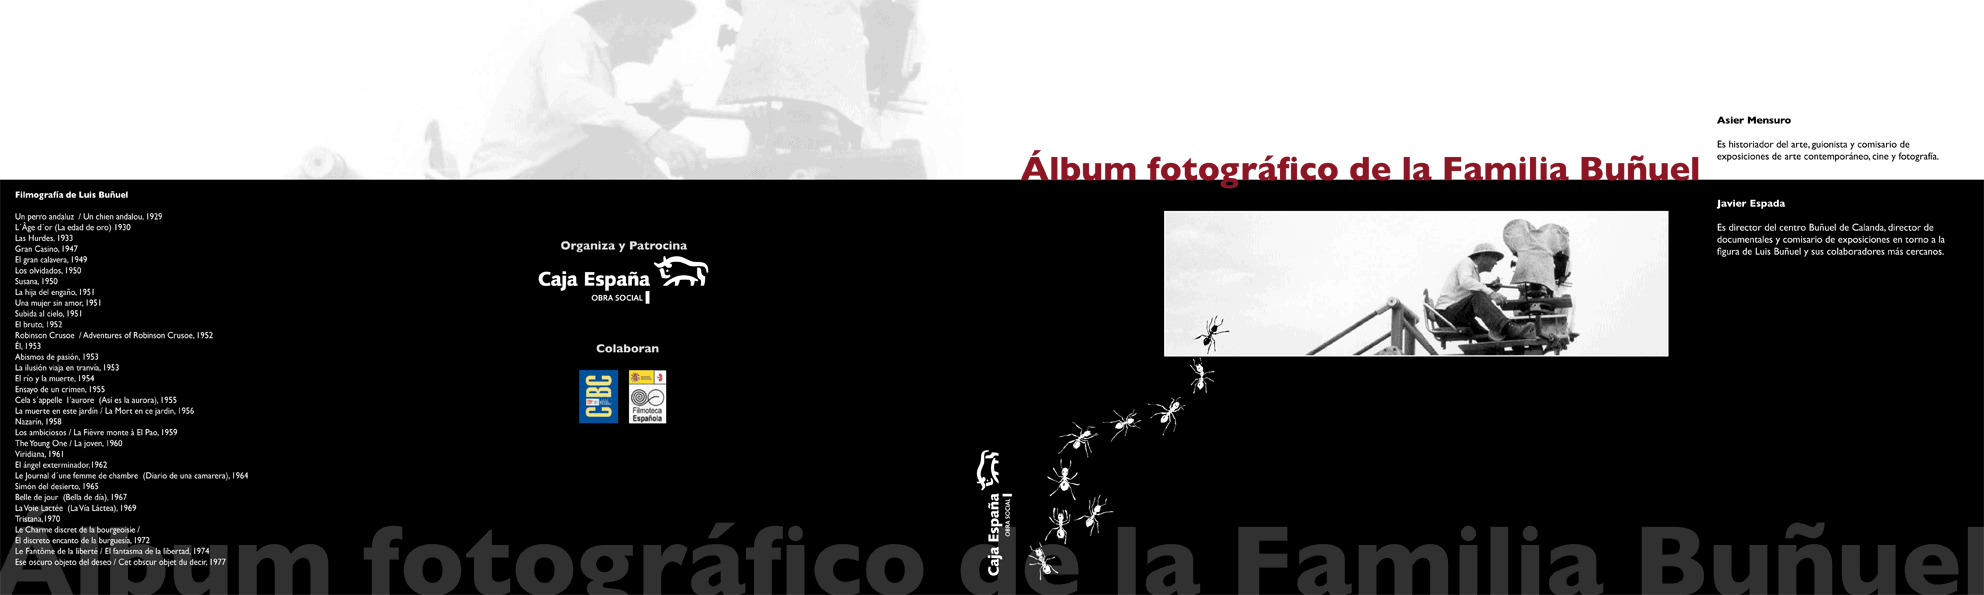 catalogo_Album fotografico familia Buñuel01